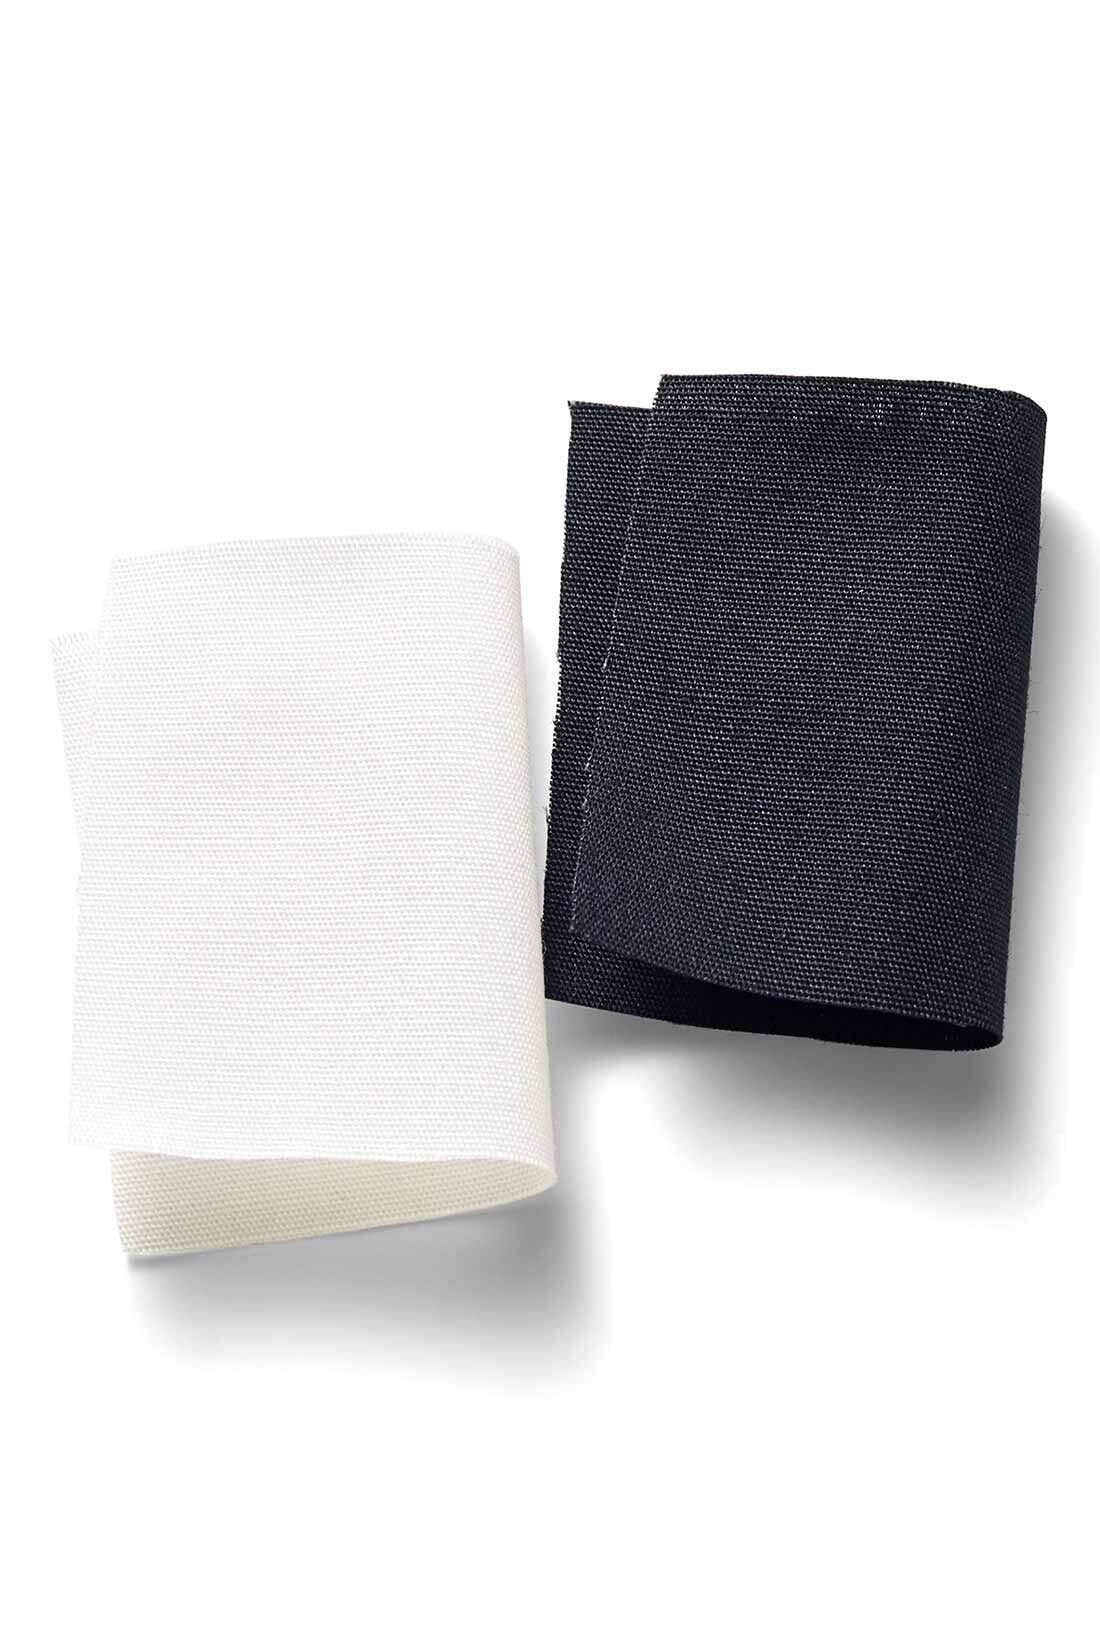 MEDE19F|MEDE19F　ピューリタンカラーシャツ〈ブラック〉|適度な張りのあるポリエステルコットンの布はく素材。甘くなりすぎず、大人感を演出できる素材を吟味しました。